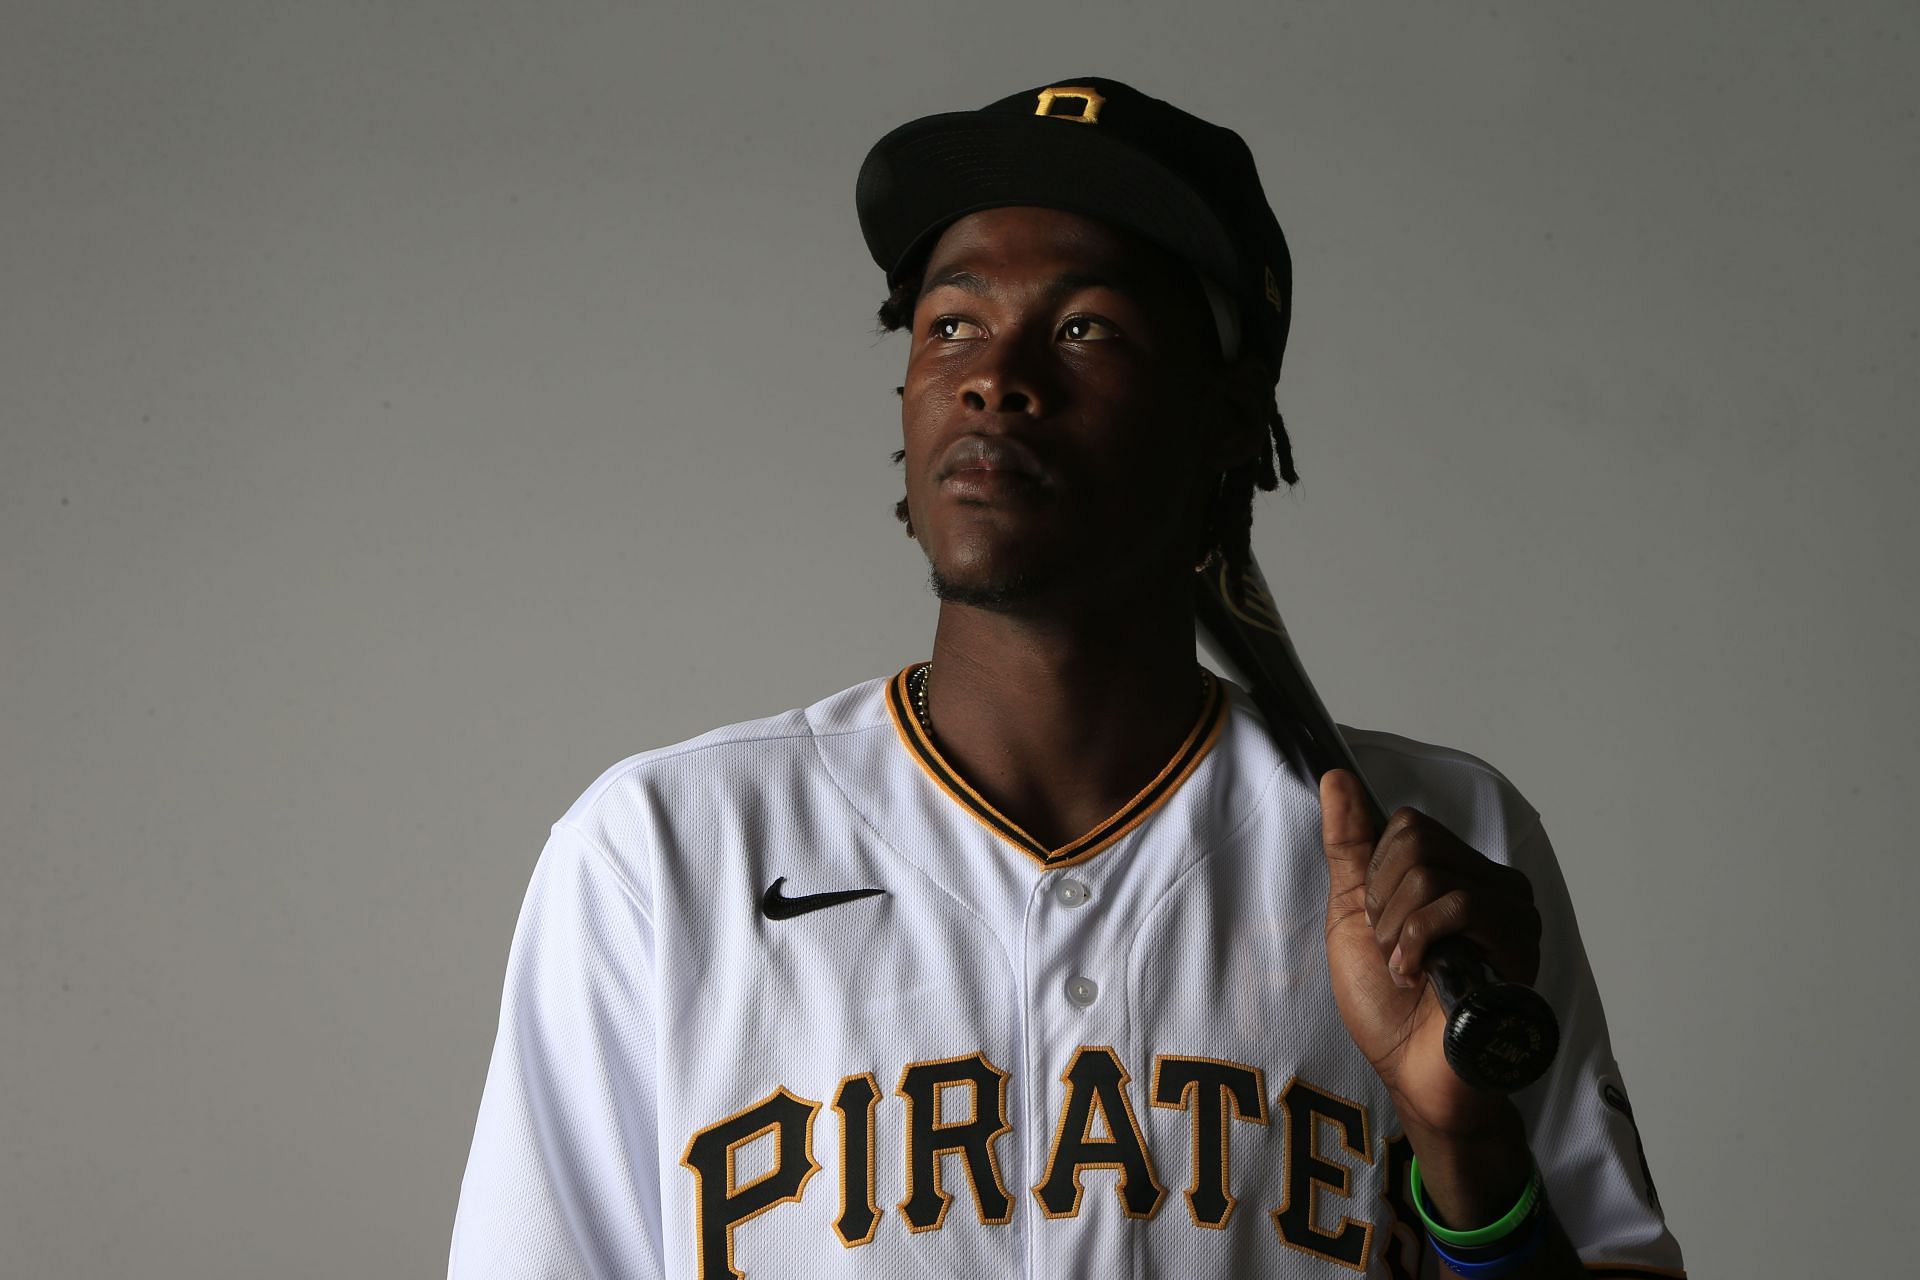 Watch: Pittsburgh Pirates 6' 7” shortstop Oneil Cruz records